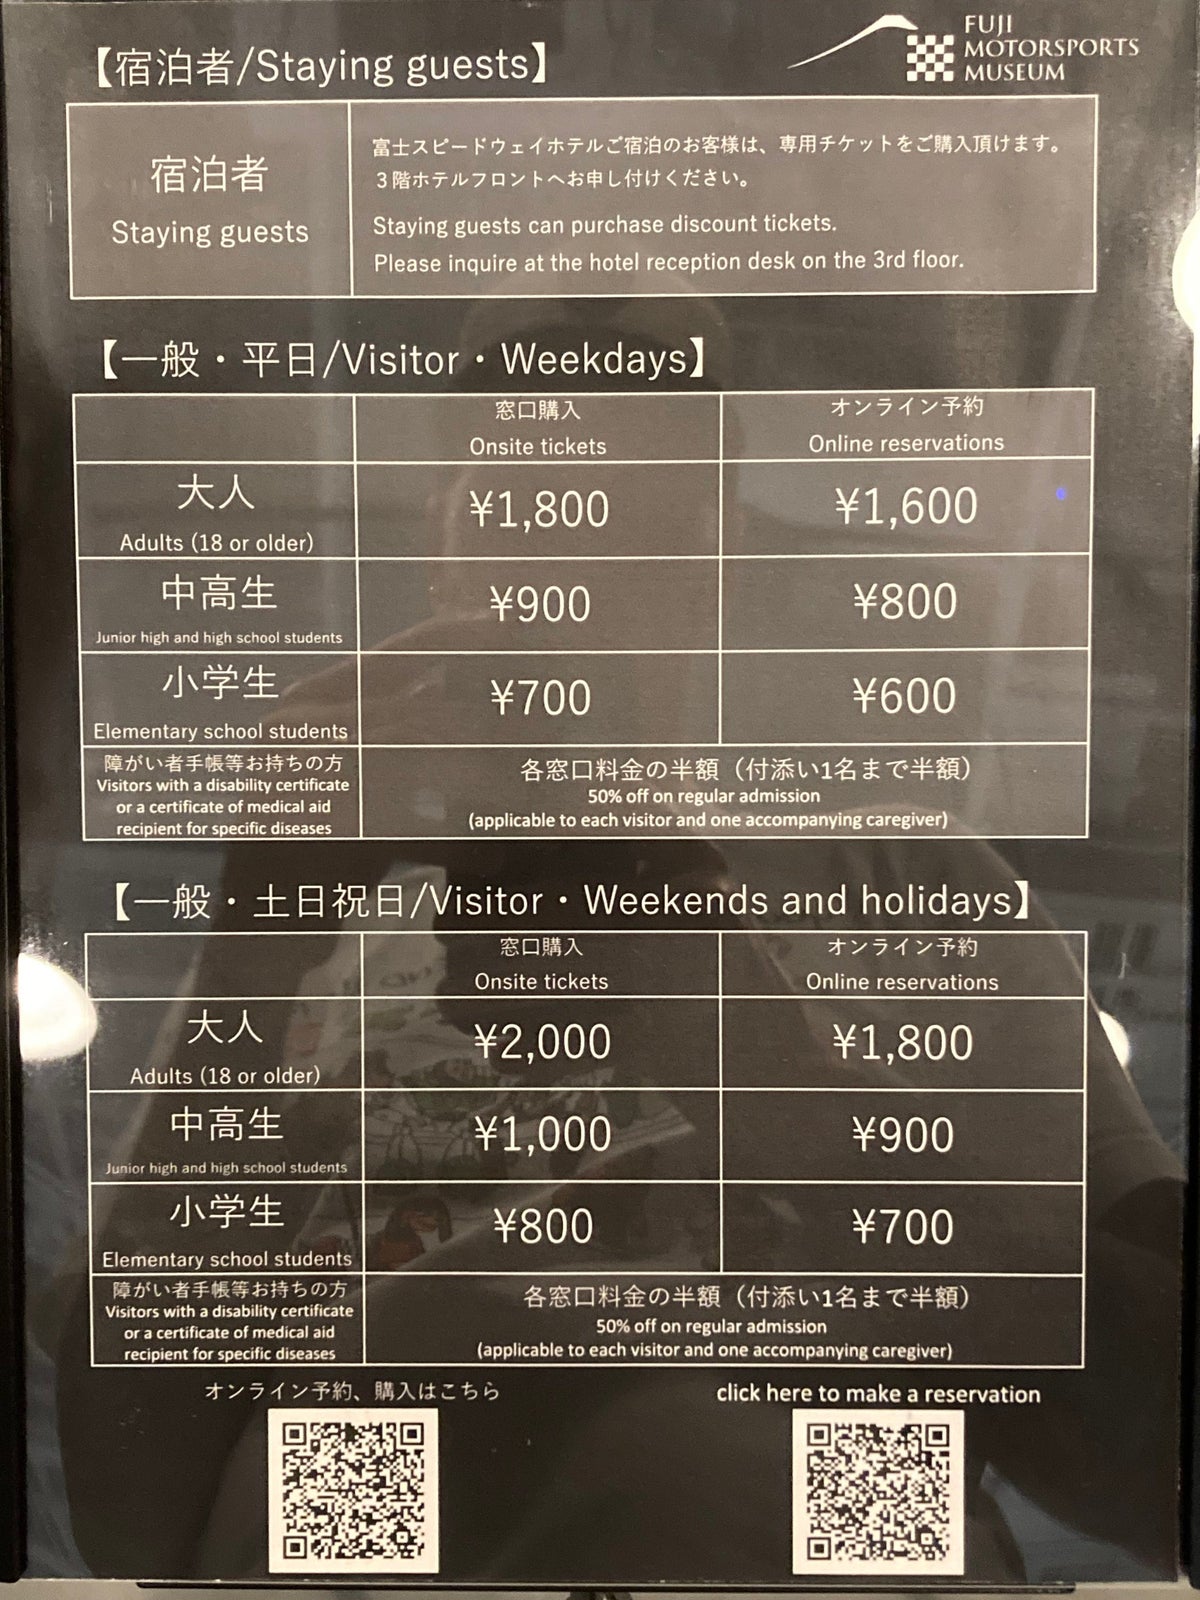 Fuji Speedway Hotel museum pricing